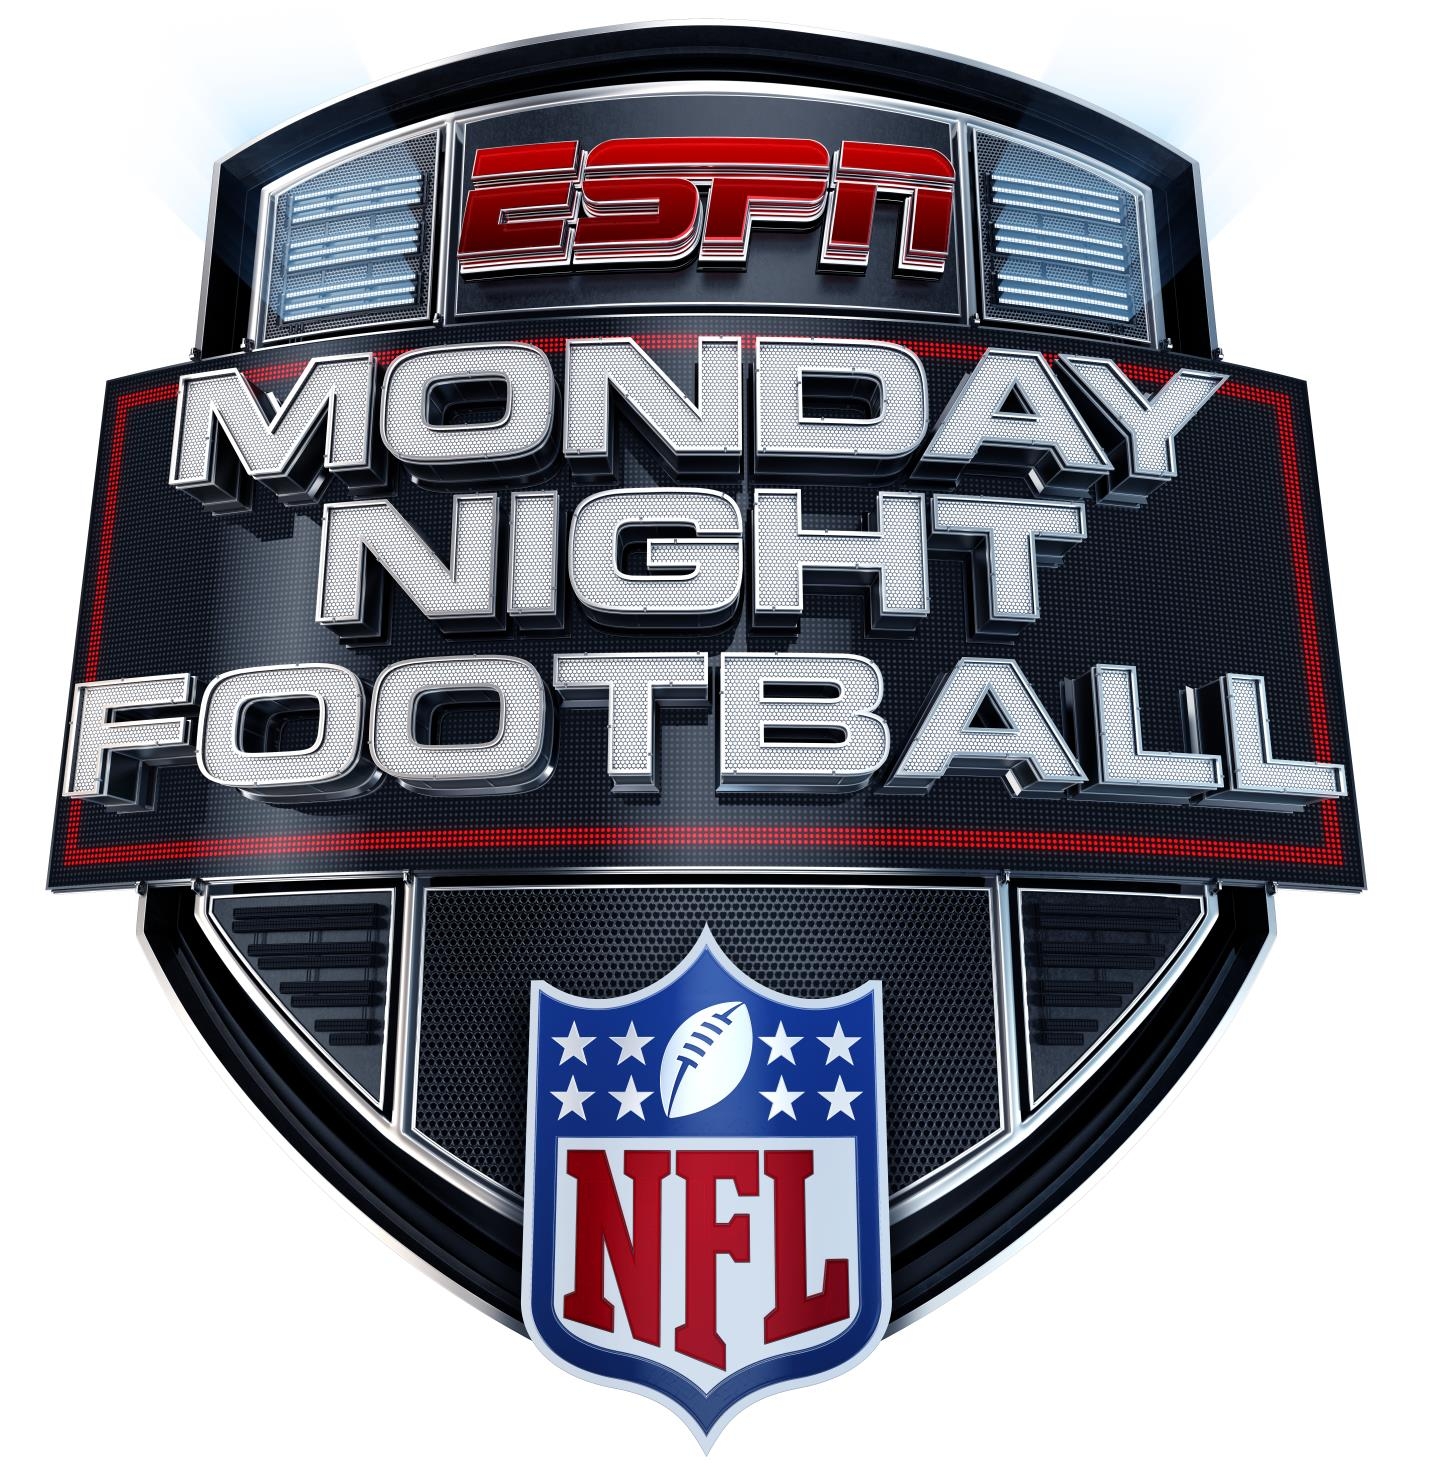 NFL Thursday Night Football 2015 TV schedule